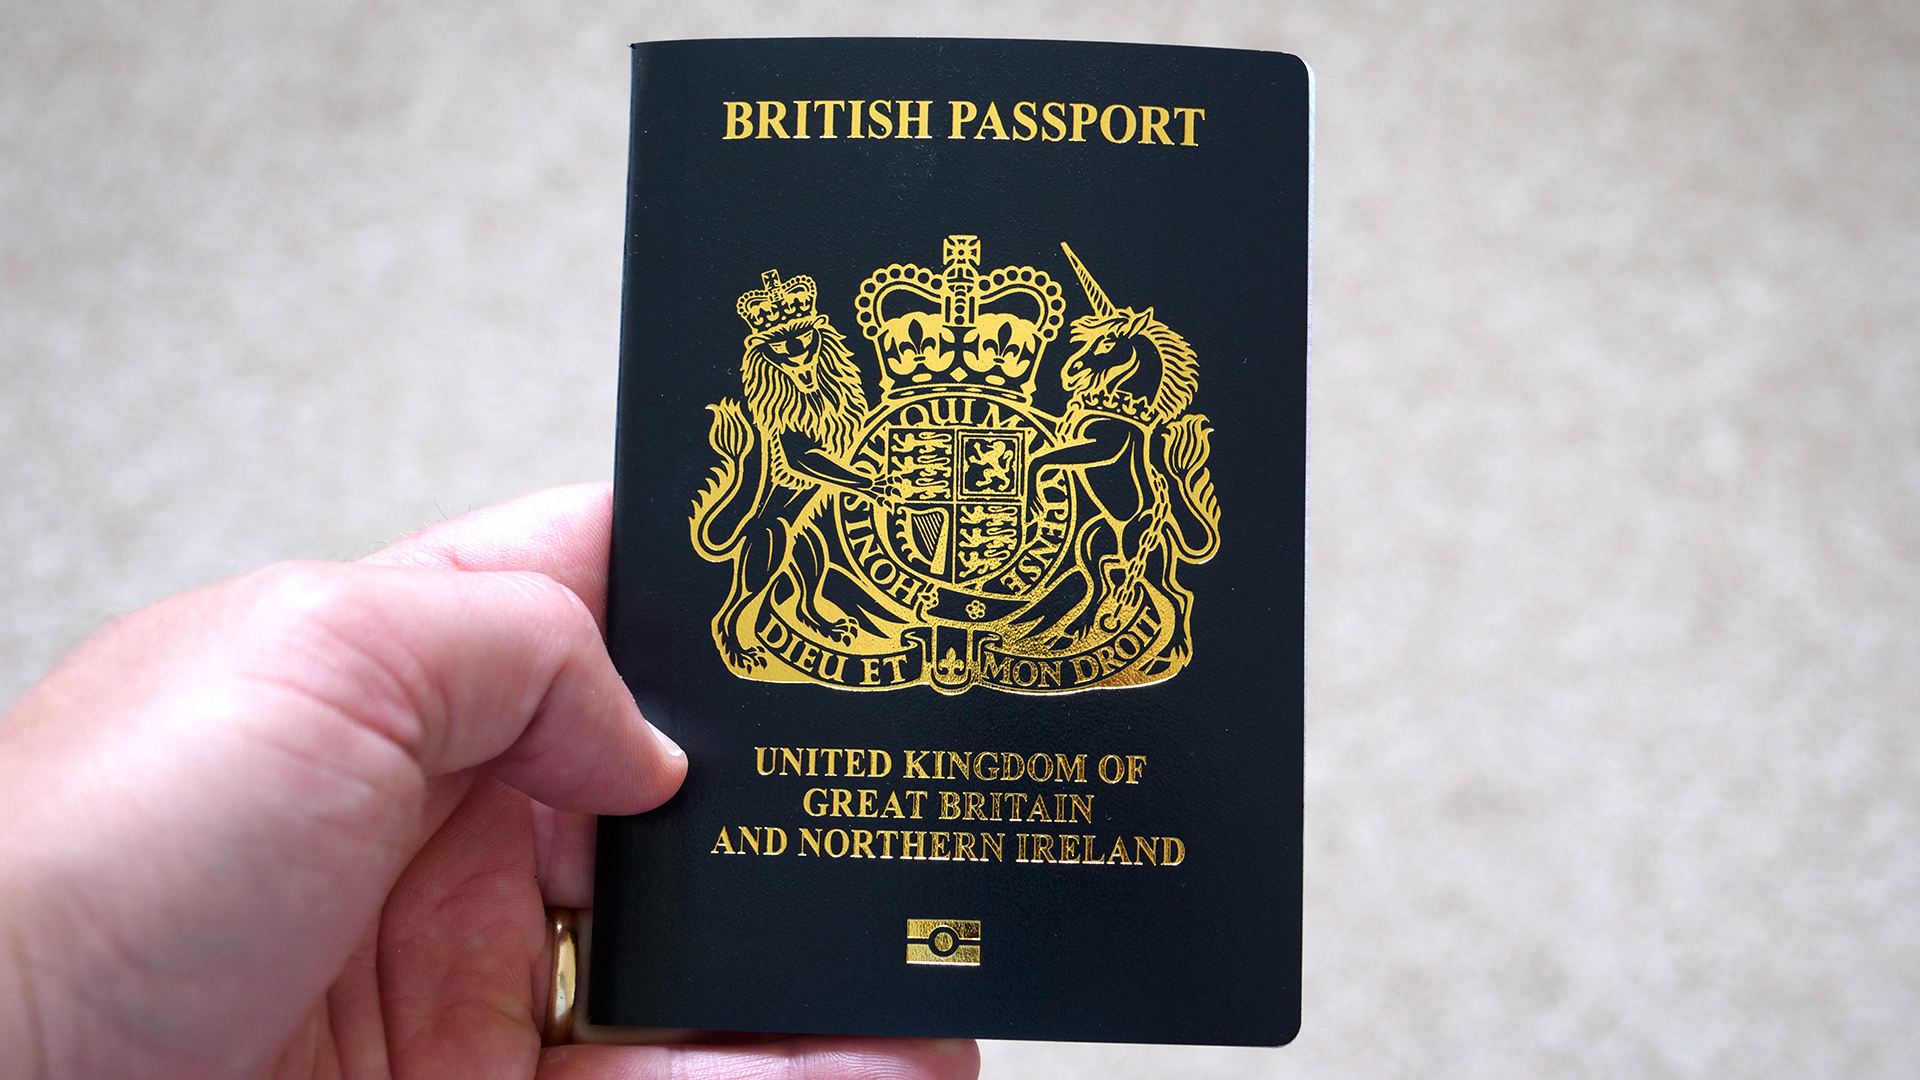 A hand holding a British passport